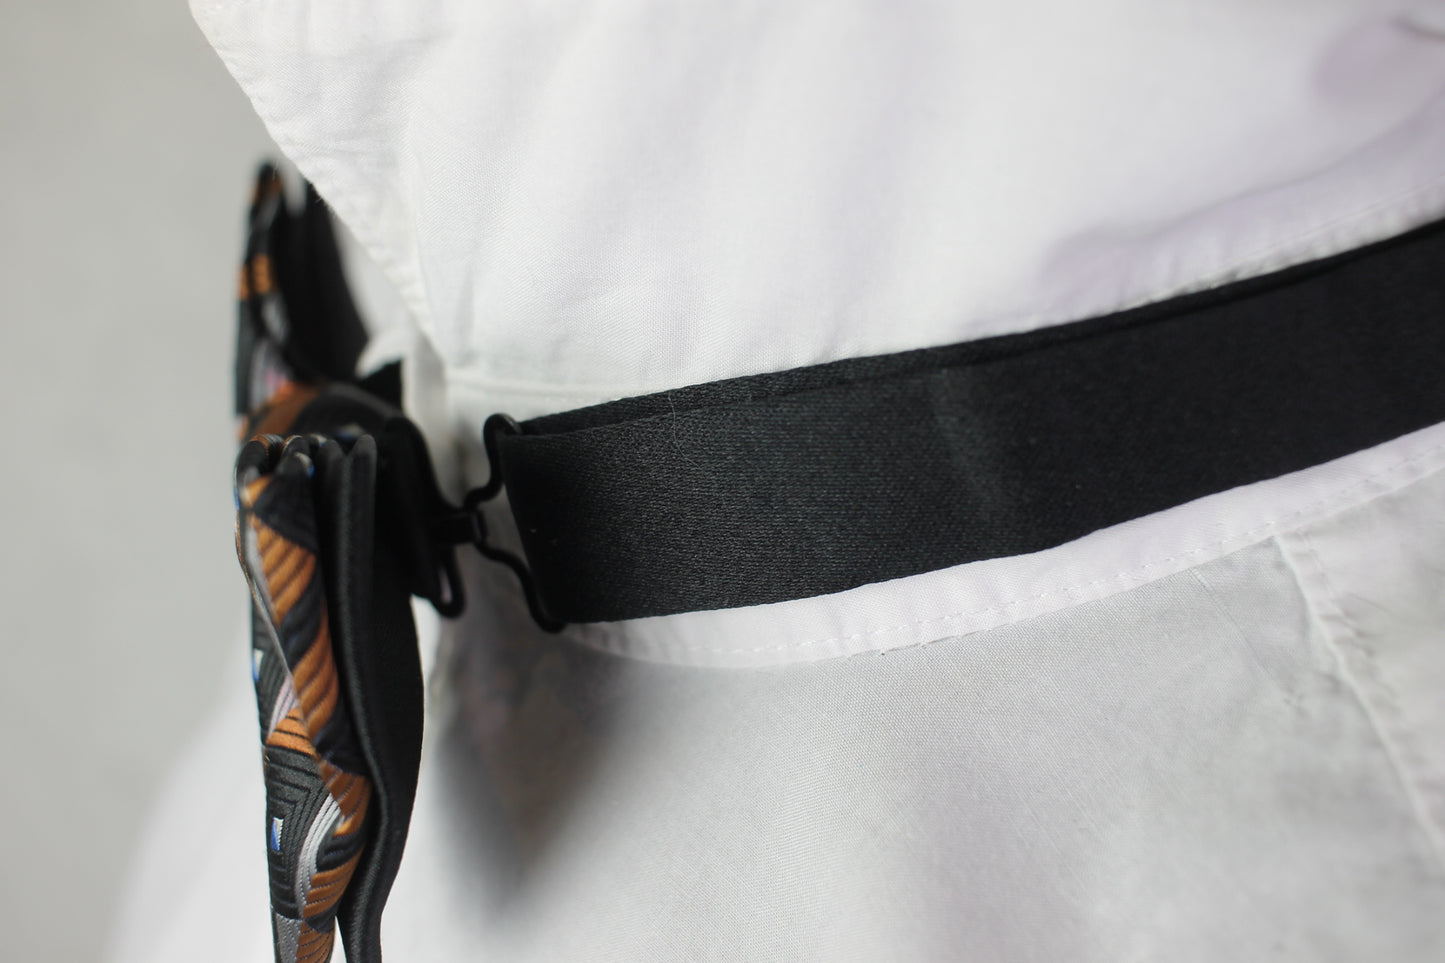 Vintage pre-tied orange black diamond pattern bow tie adjustable